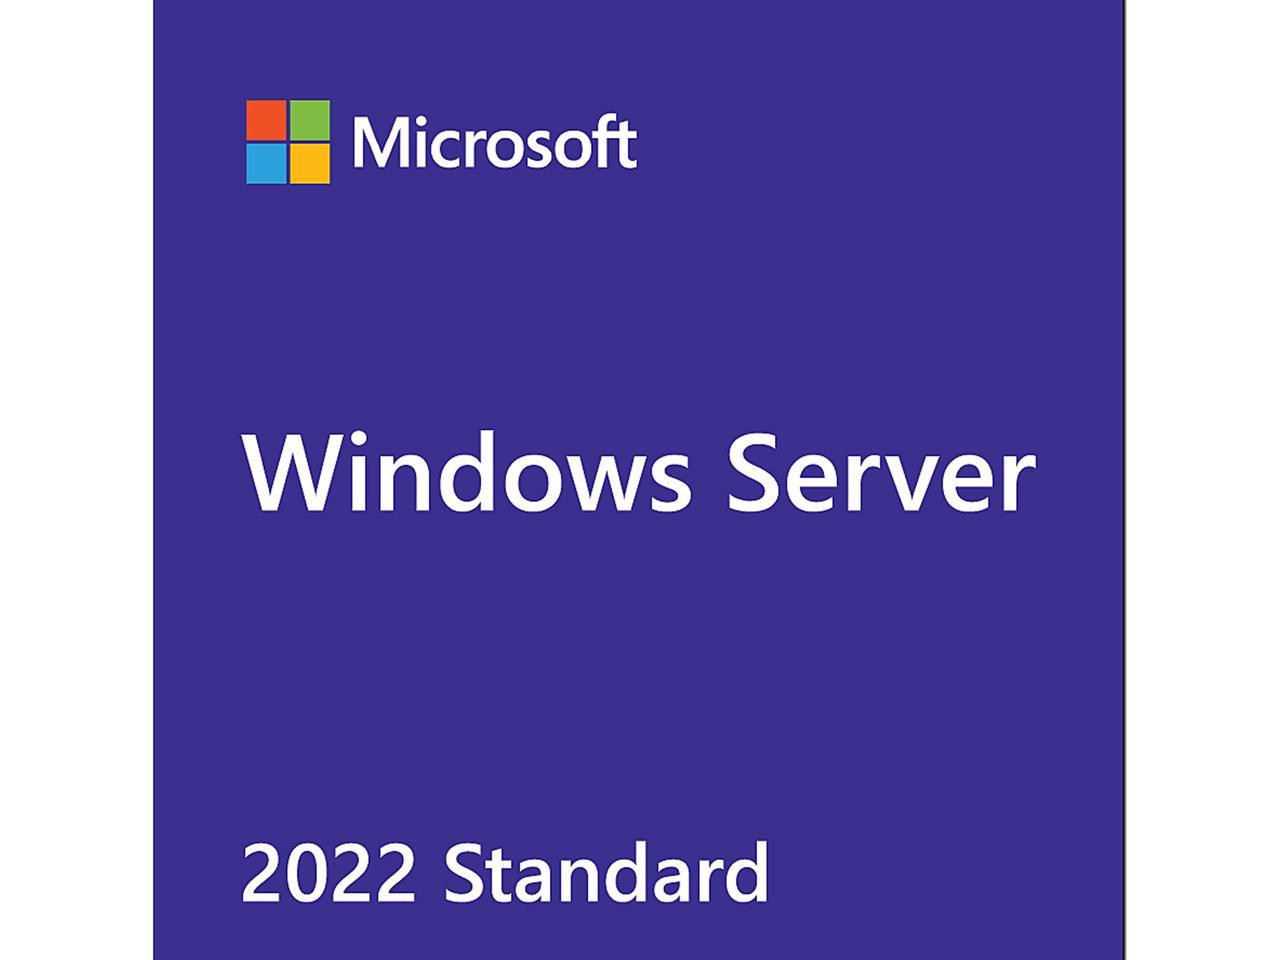 Windows Server Essentials Vs Standard